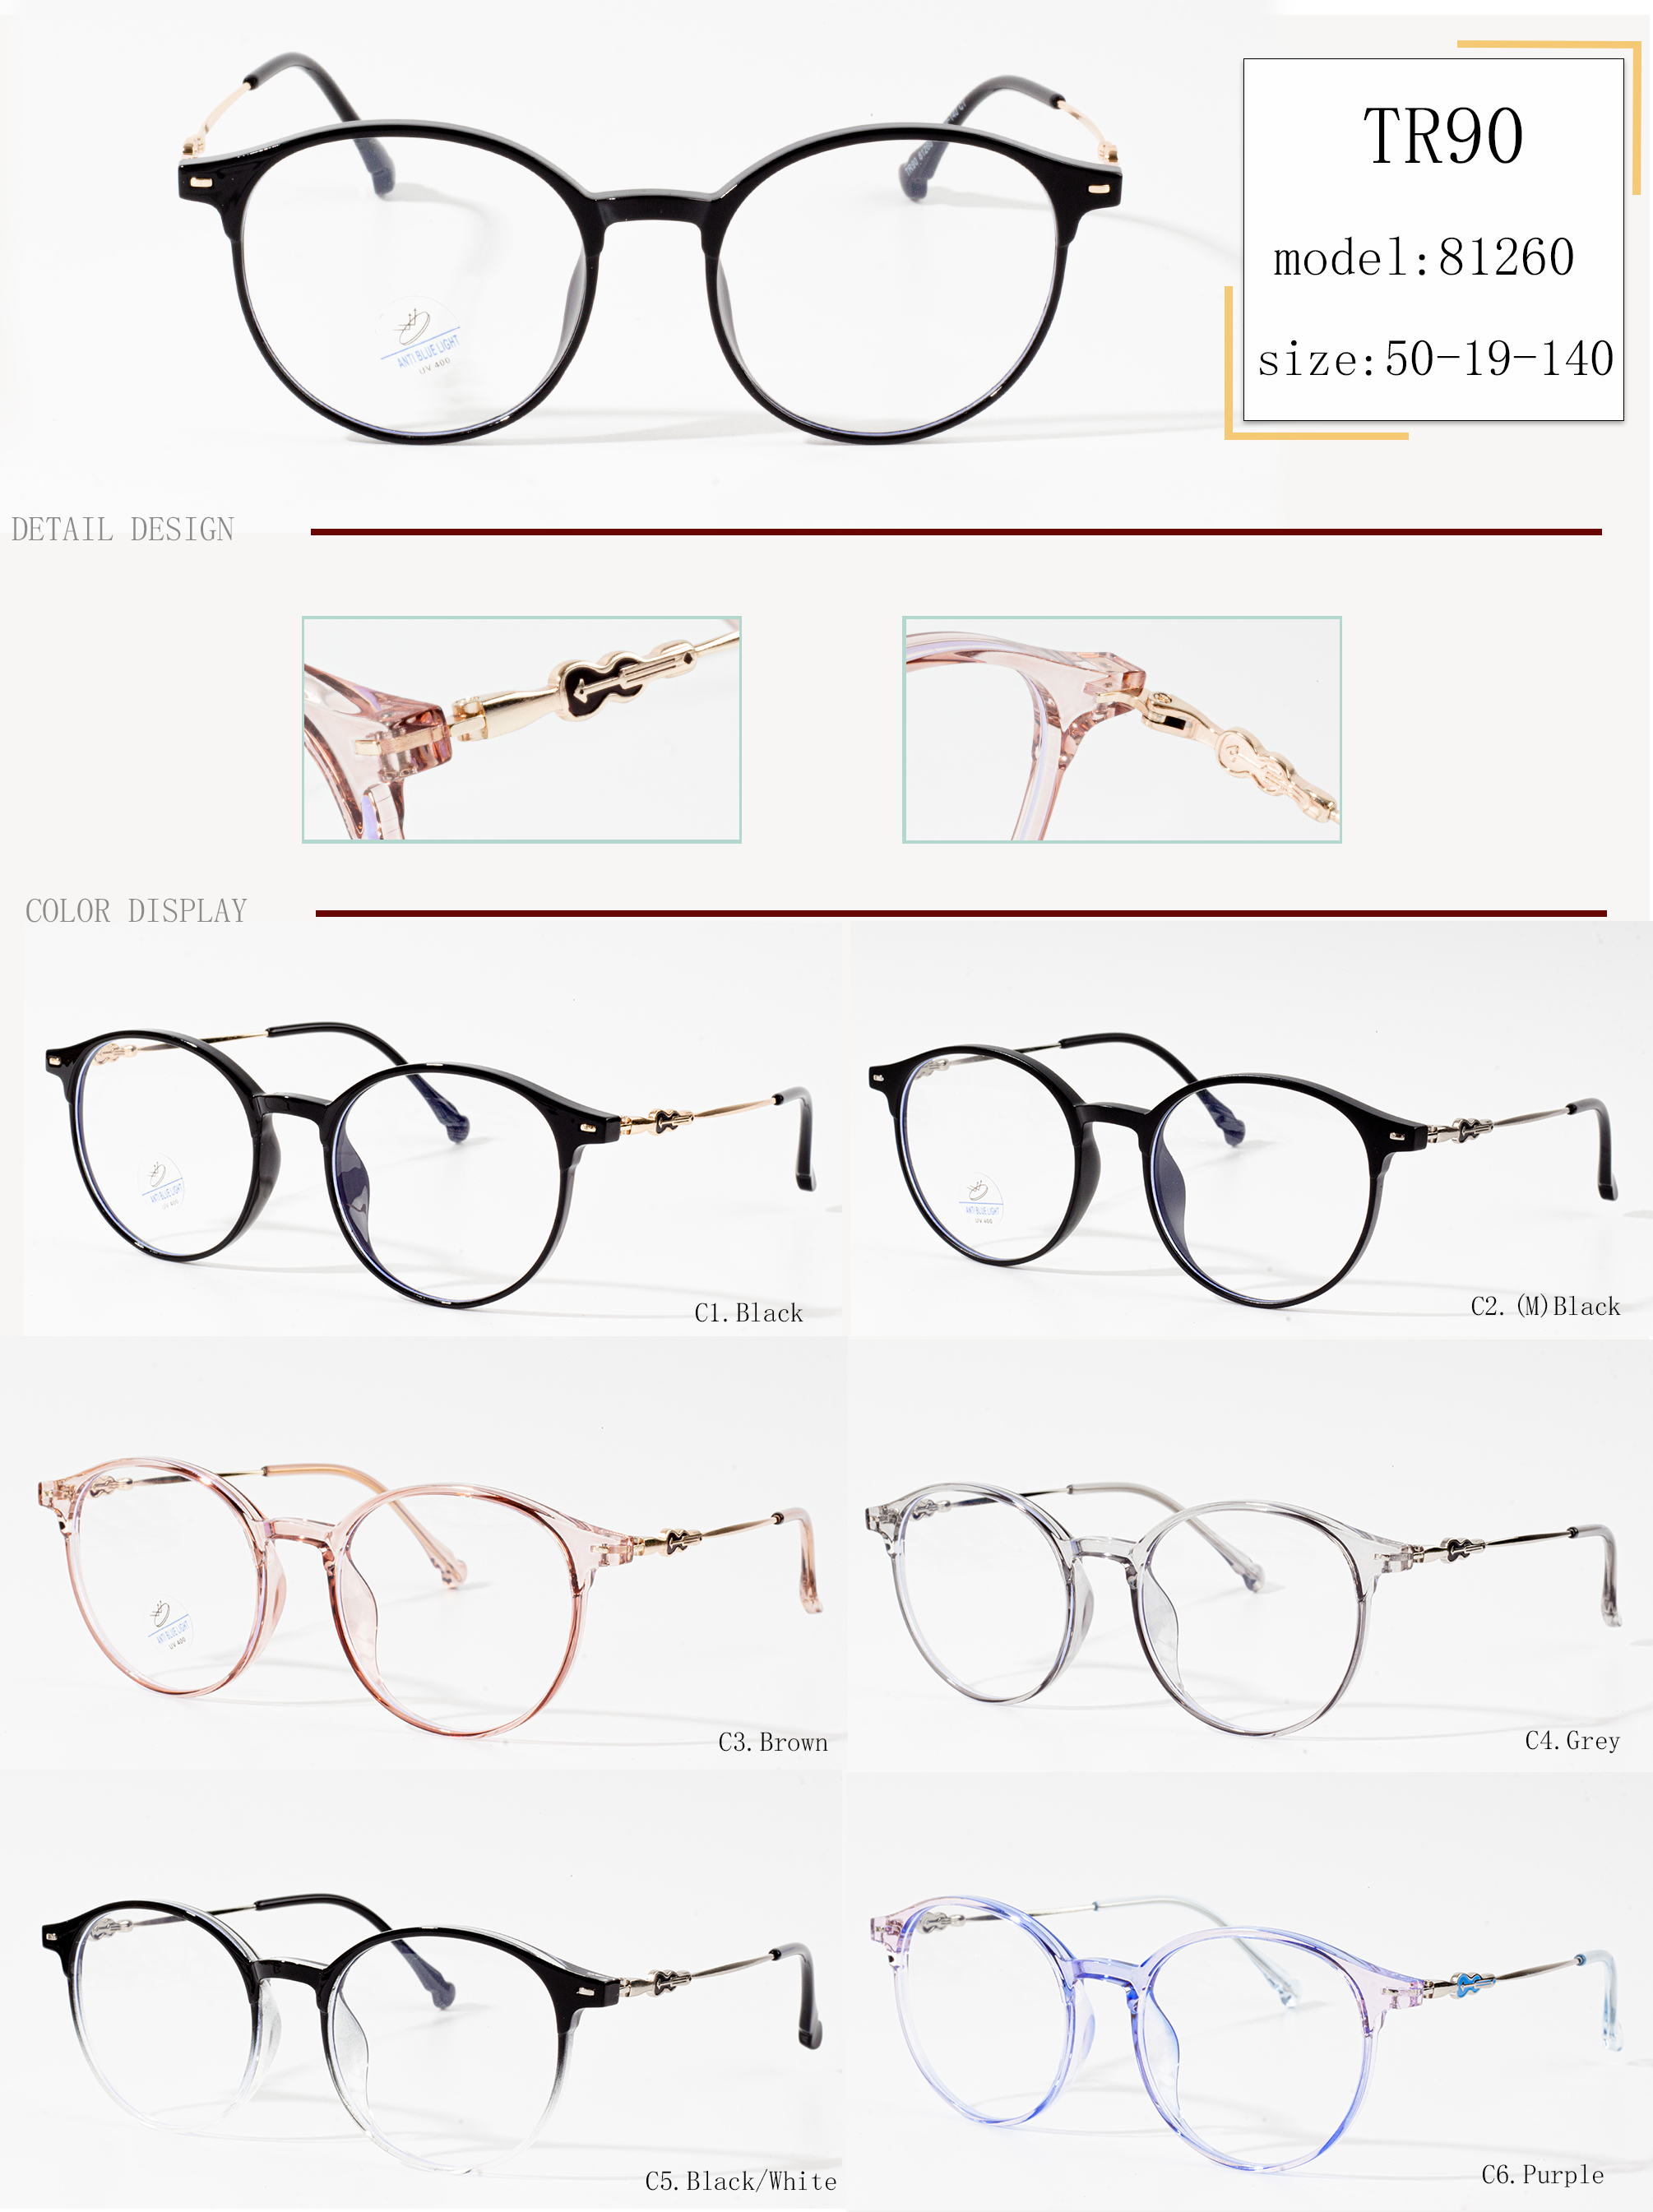 nine west eyeglass frames